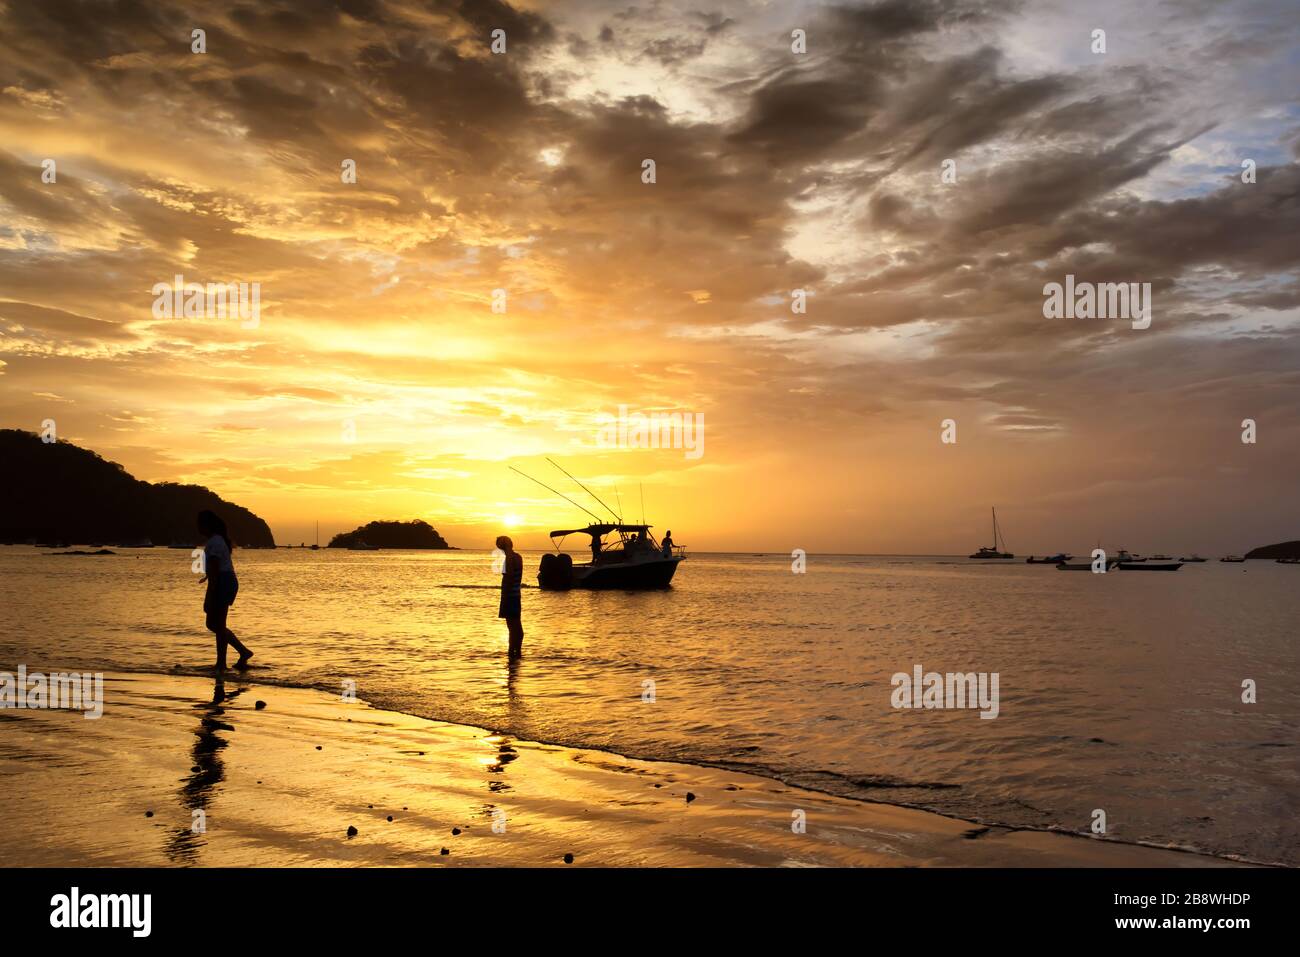 Dreamy sunset over a beach in Costa Rica. Beautiful pacific ocean landscape. Stock Photo